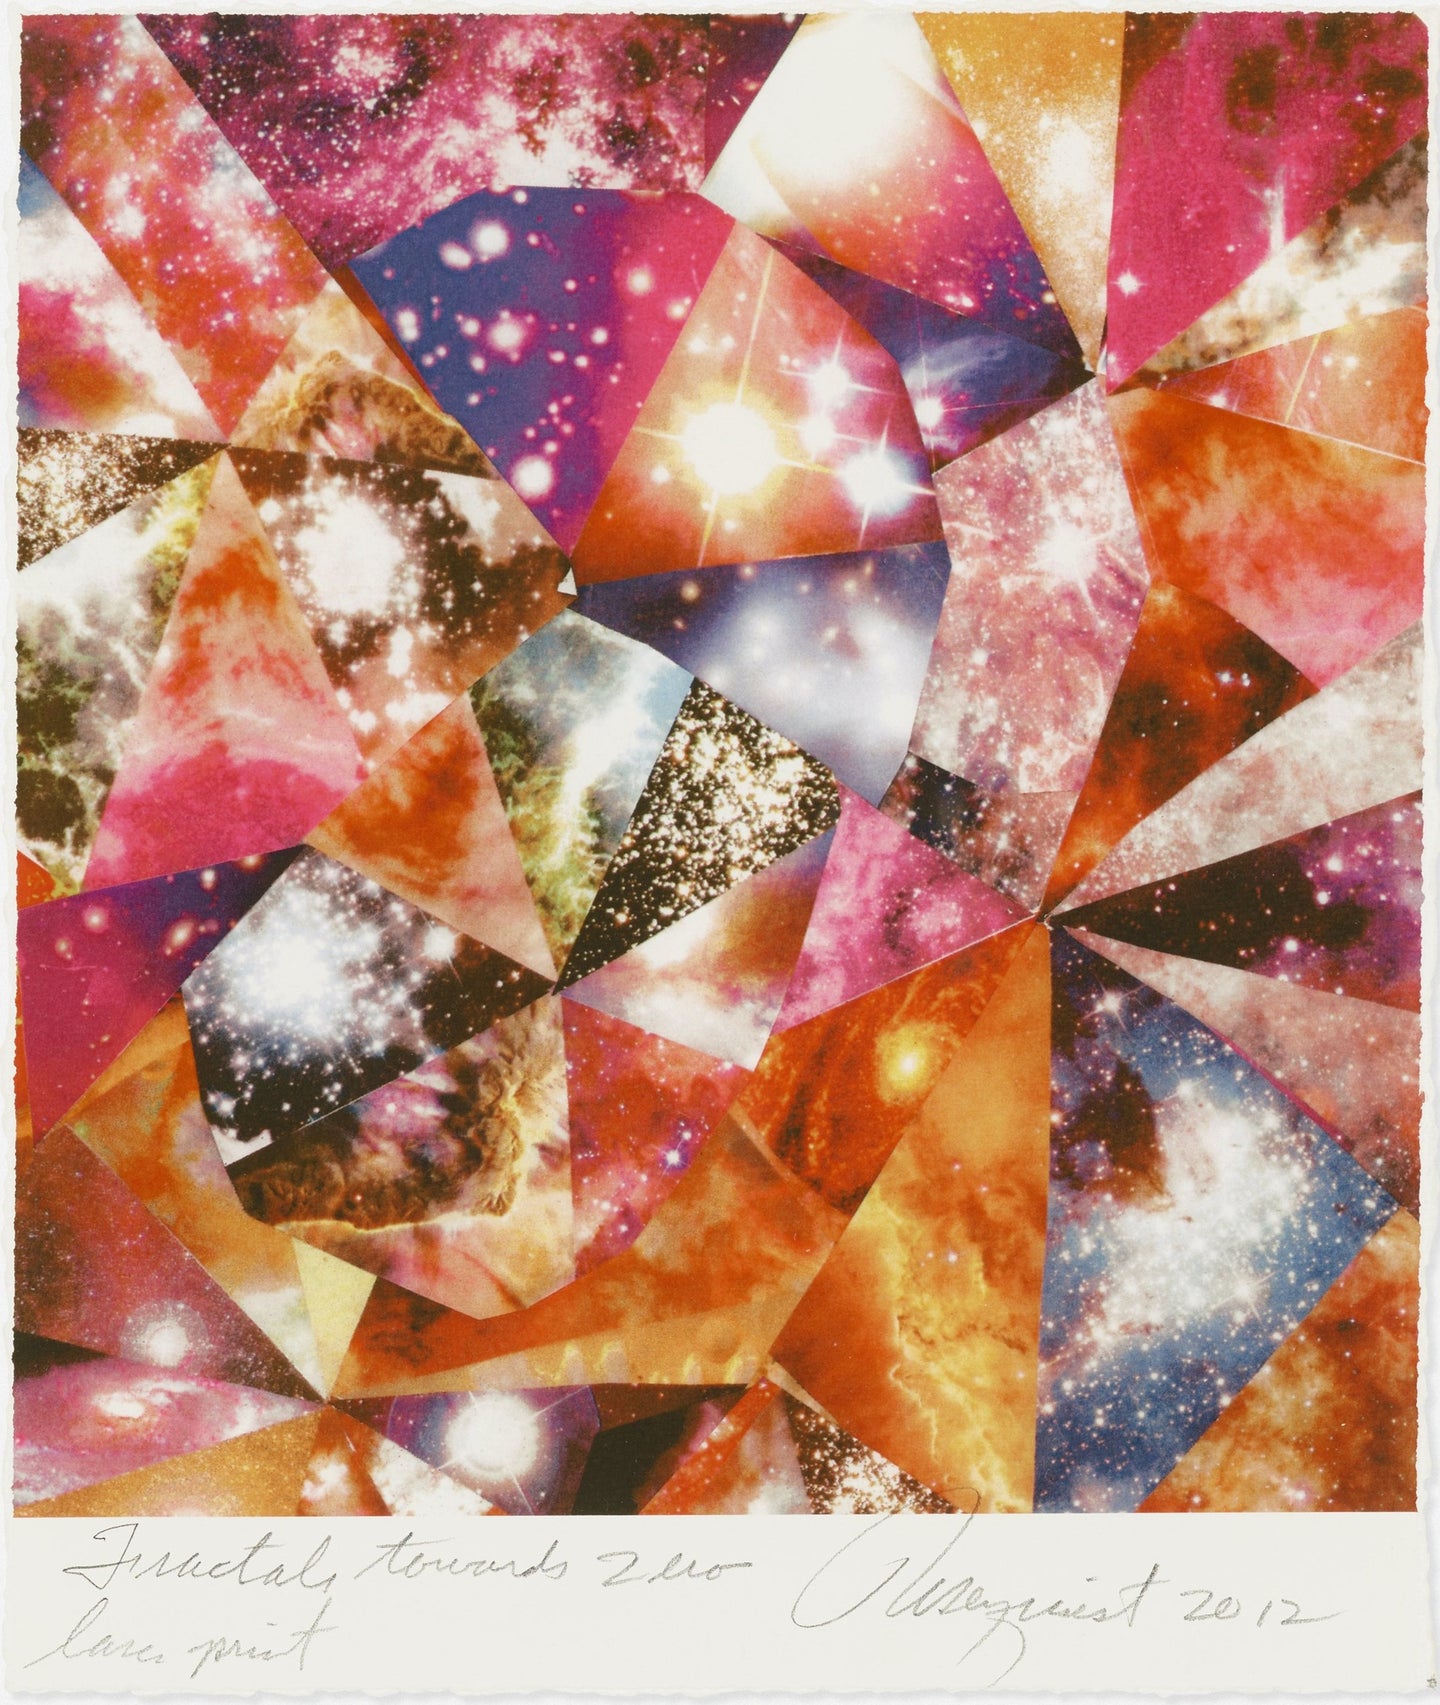 James Rosenquist, Fractal Towards Zero, 2012, Laser print on paper, 11 x 9 inches, James Rosenquist prints